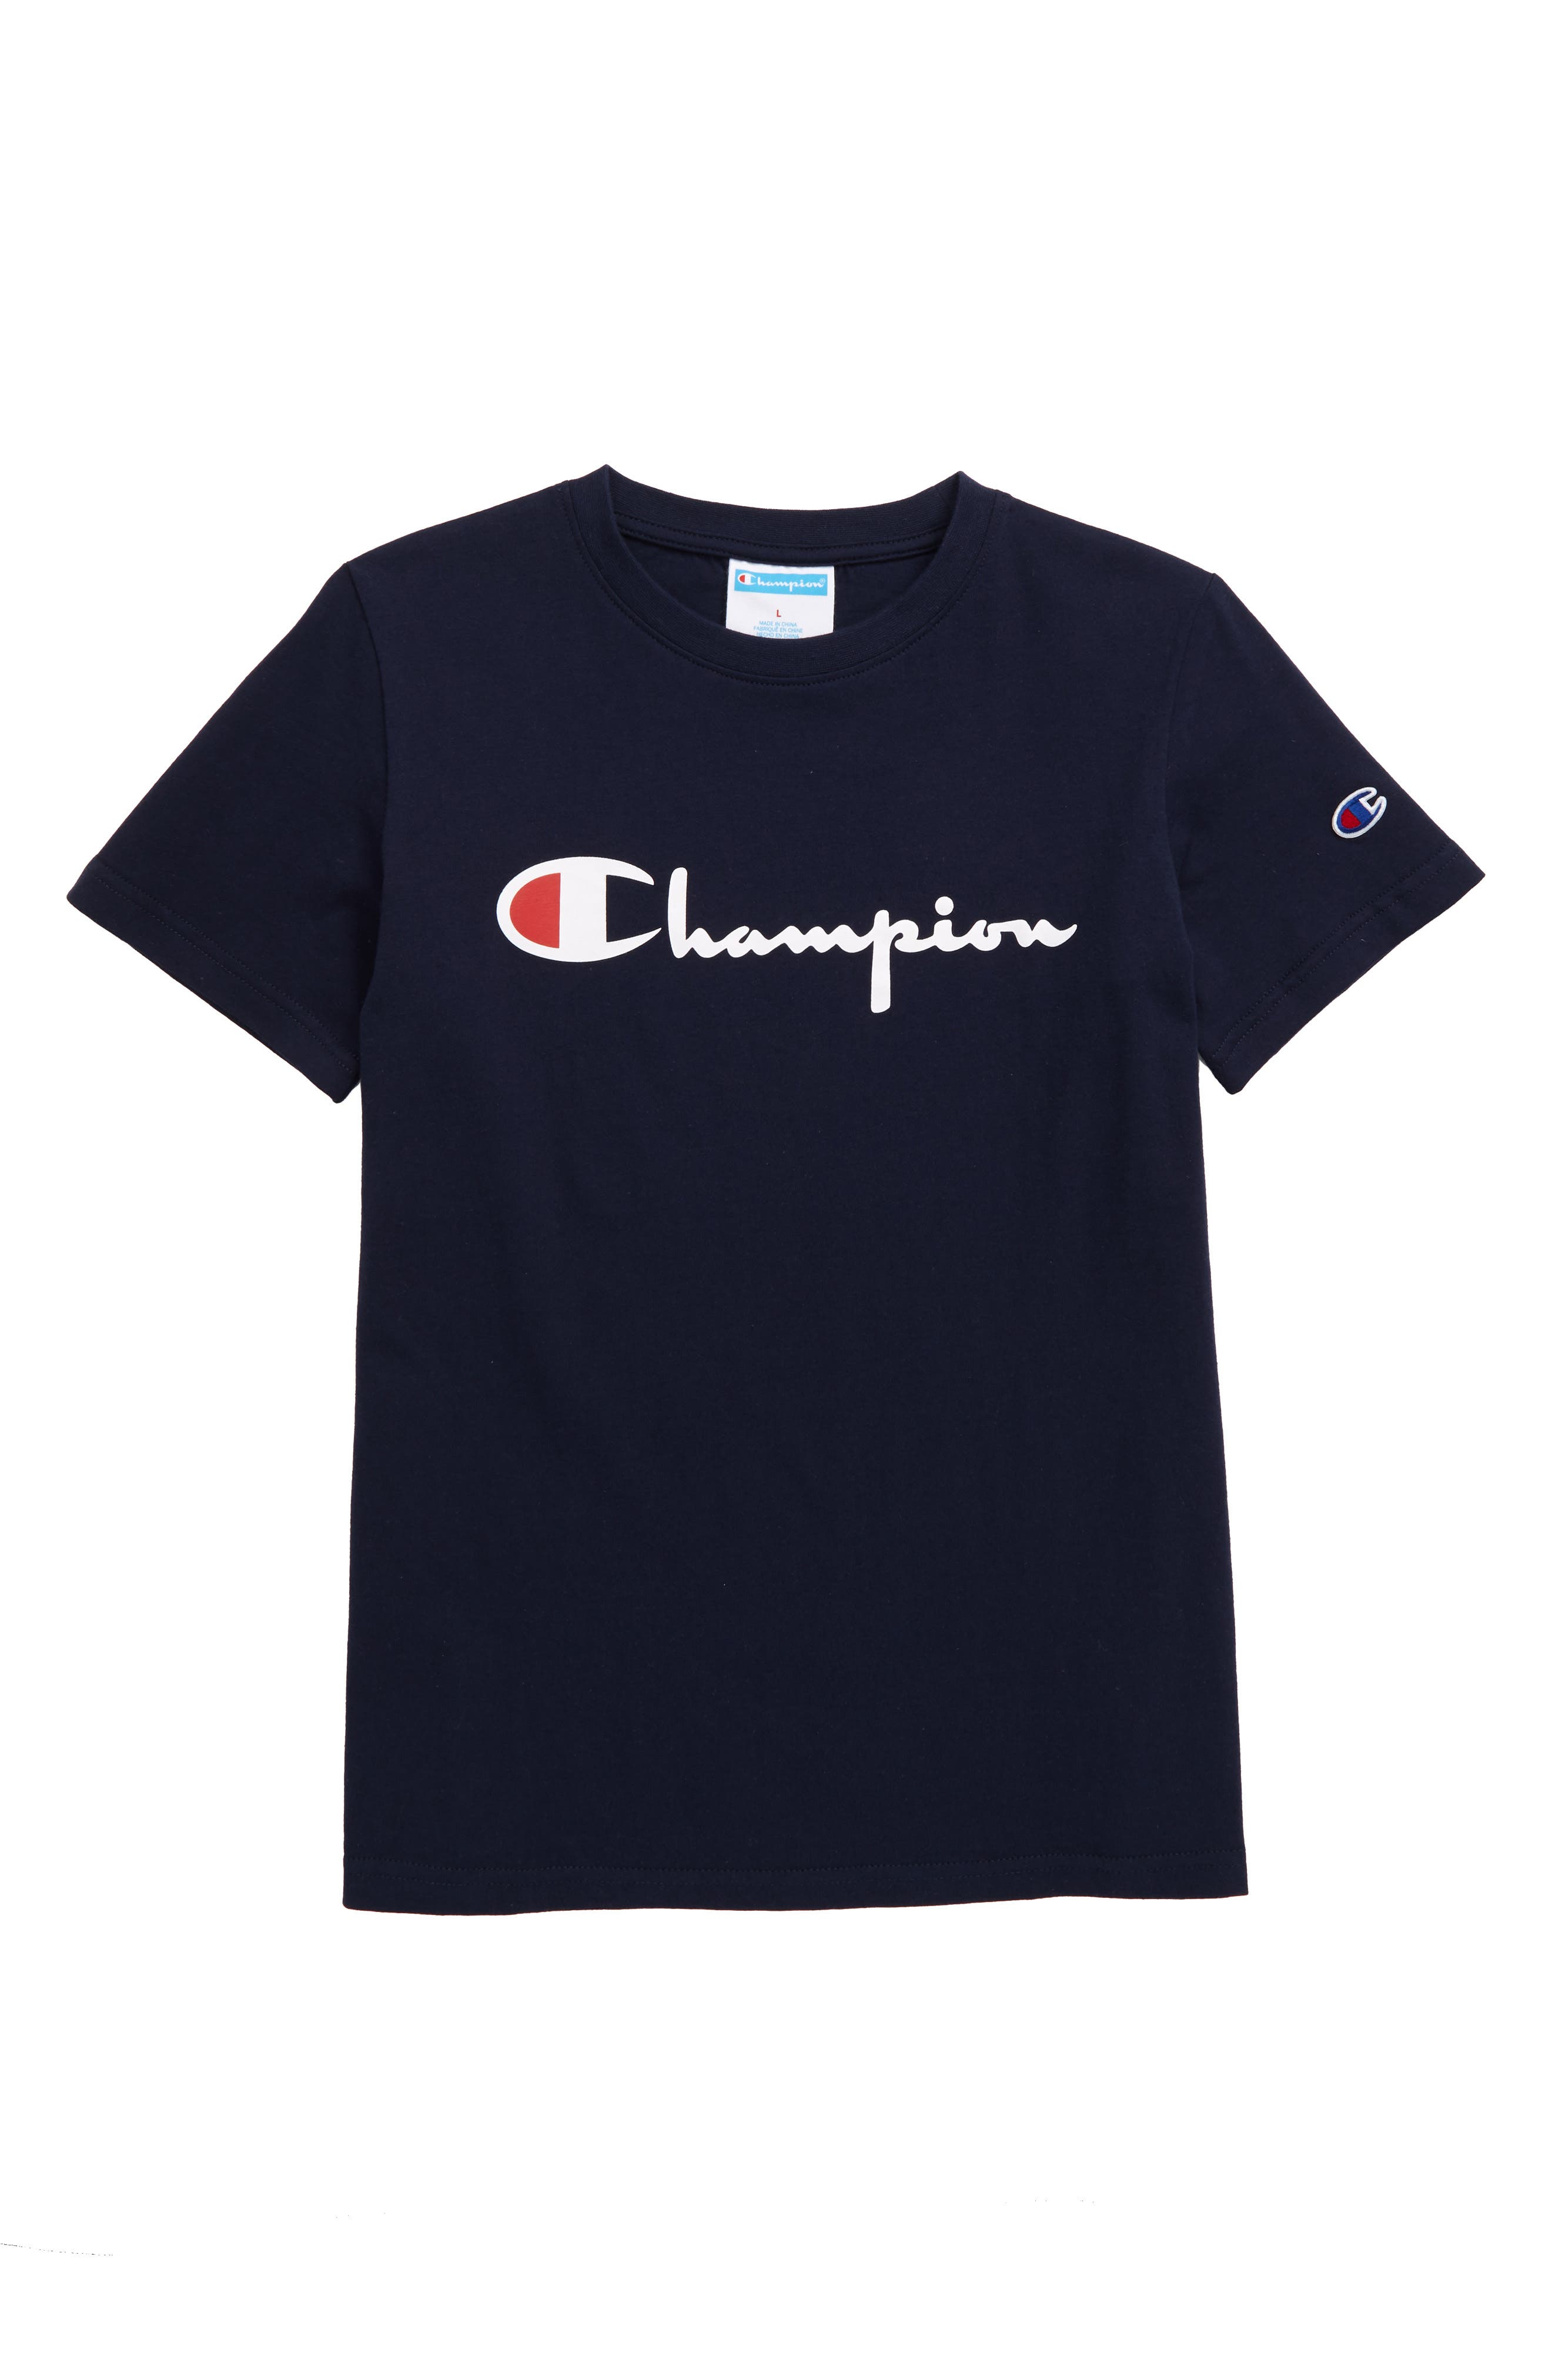 champion shirts for infants